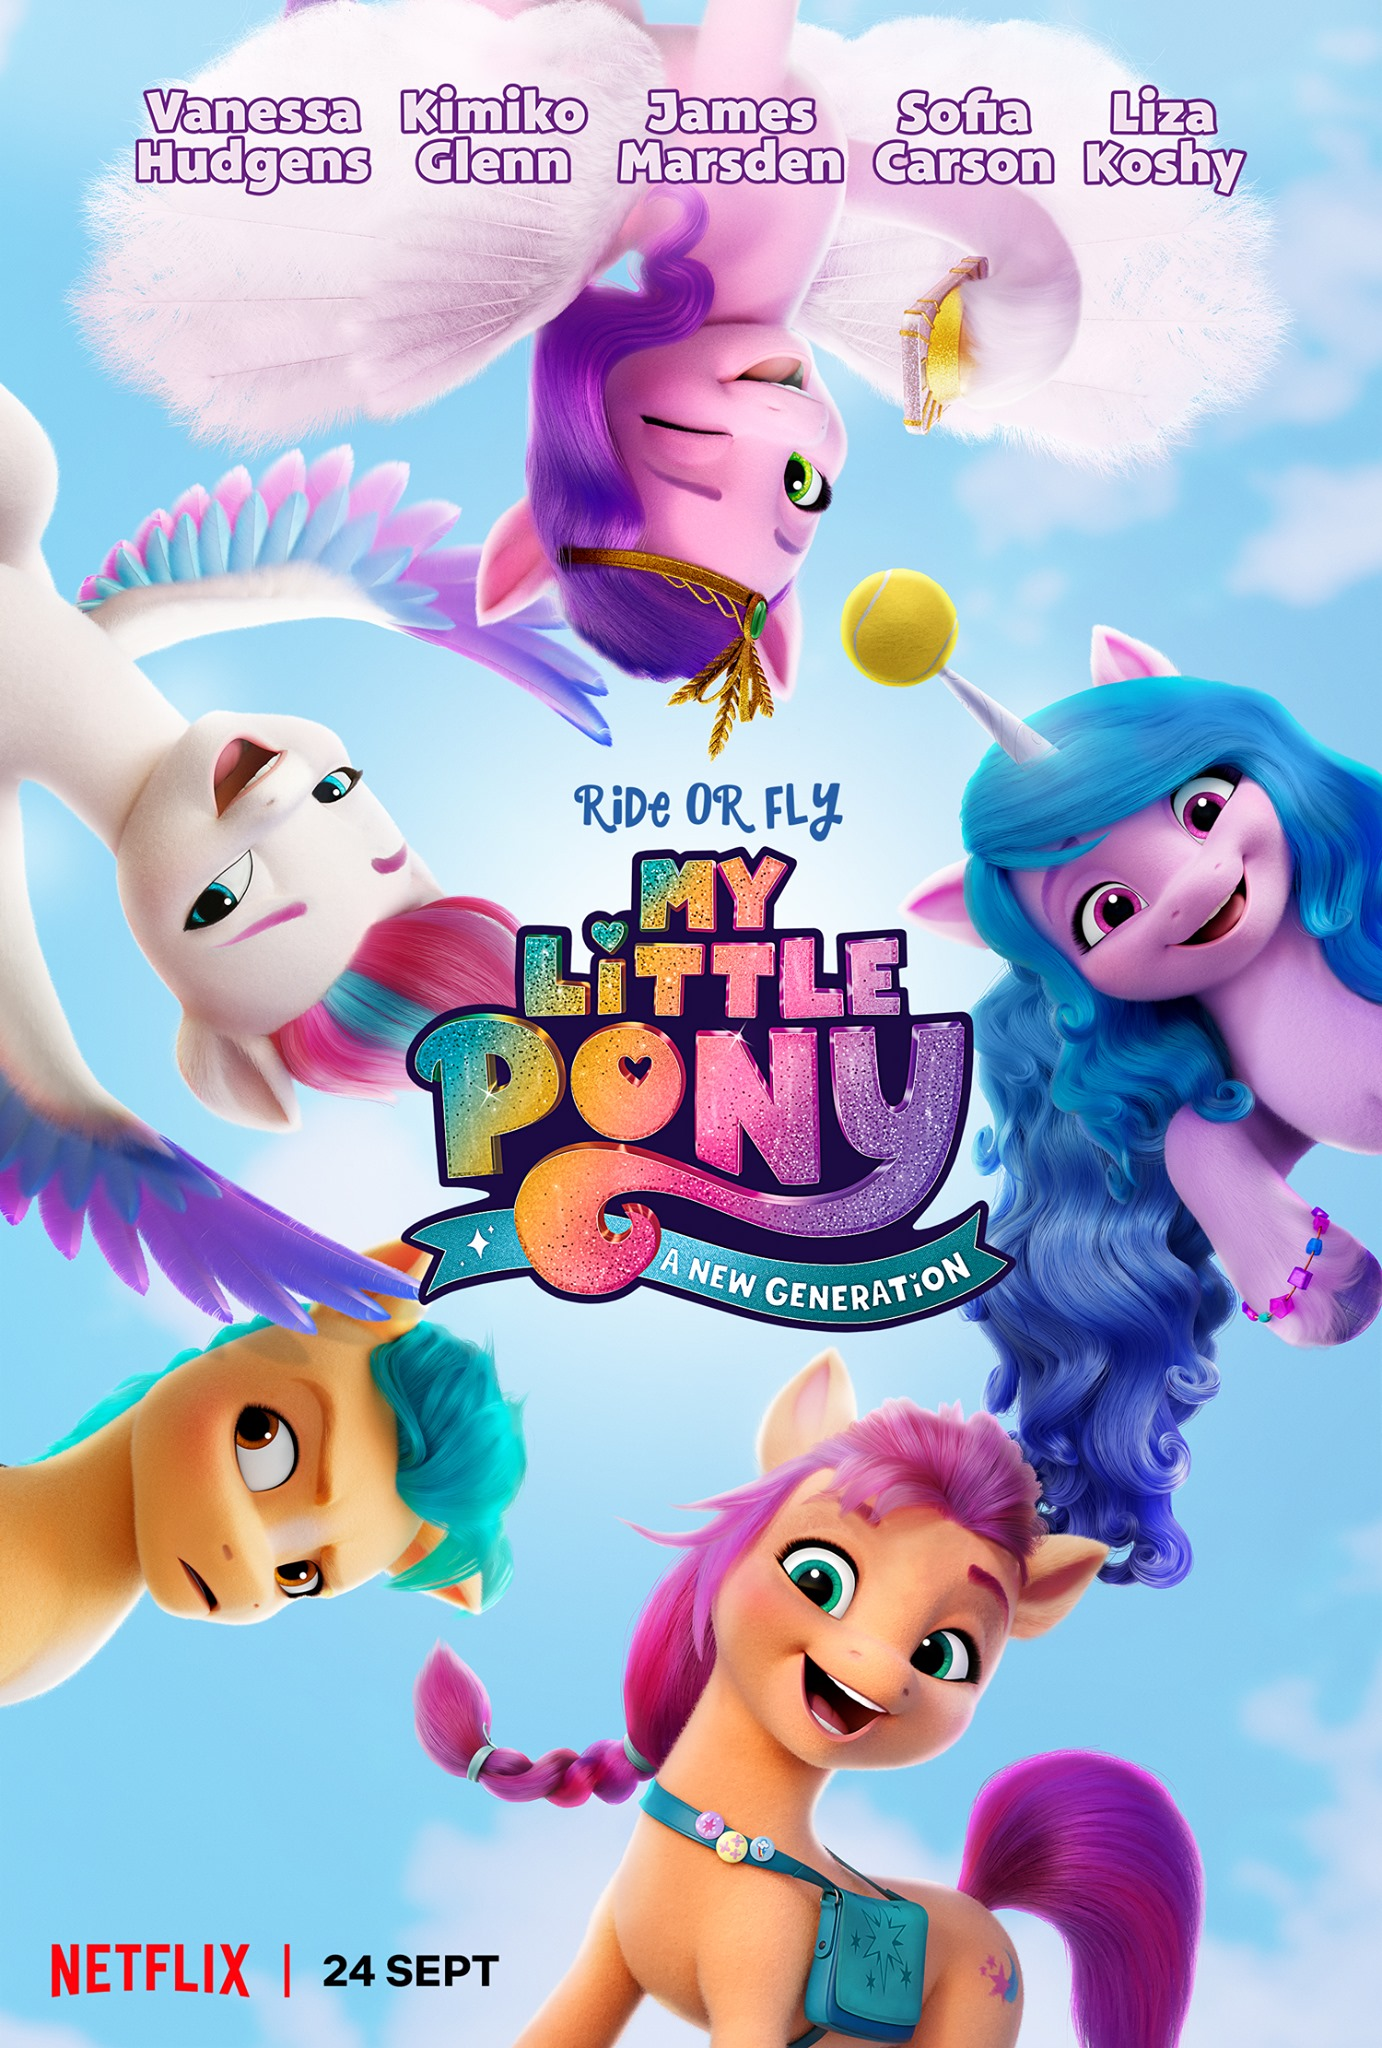 New Movie: Netflix’s My Little Pony A New Generation Starring Vanessa Hudgens